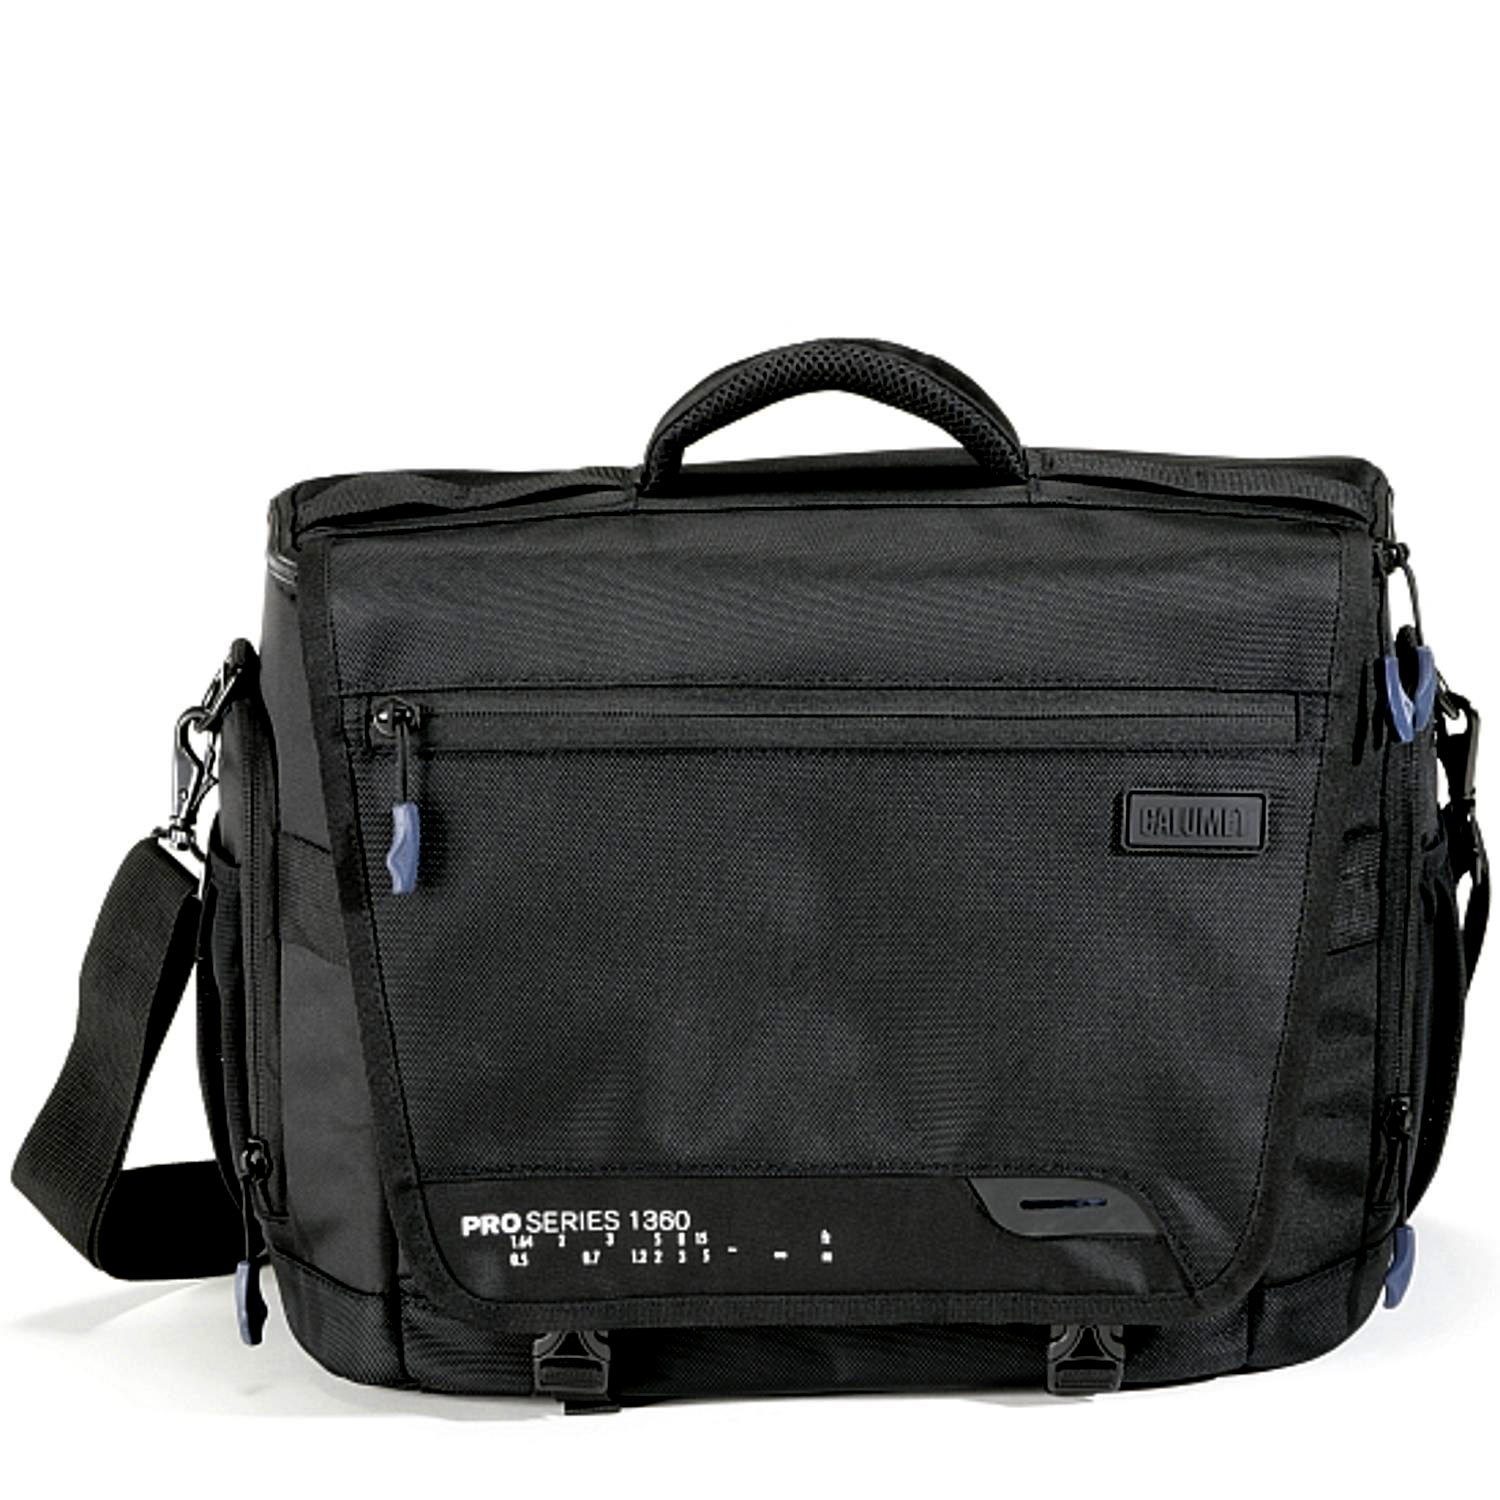 Calumet Pro Series 1360 Large Shoulder Bag | Wex Photo Video